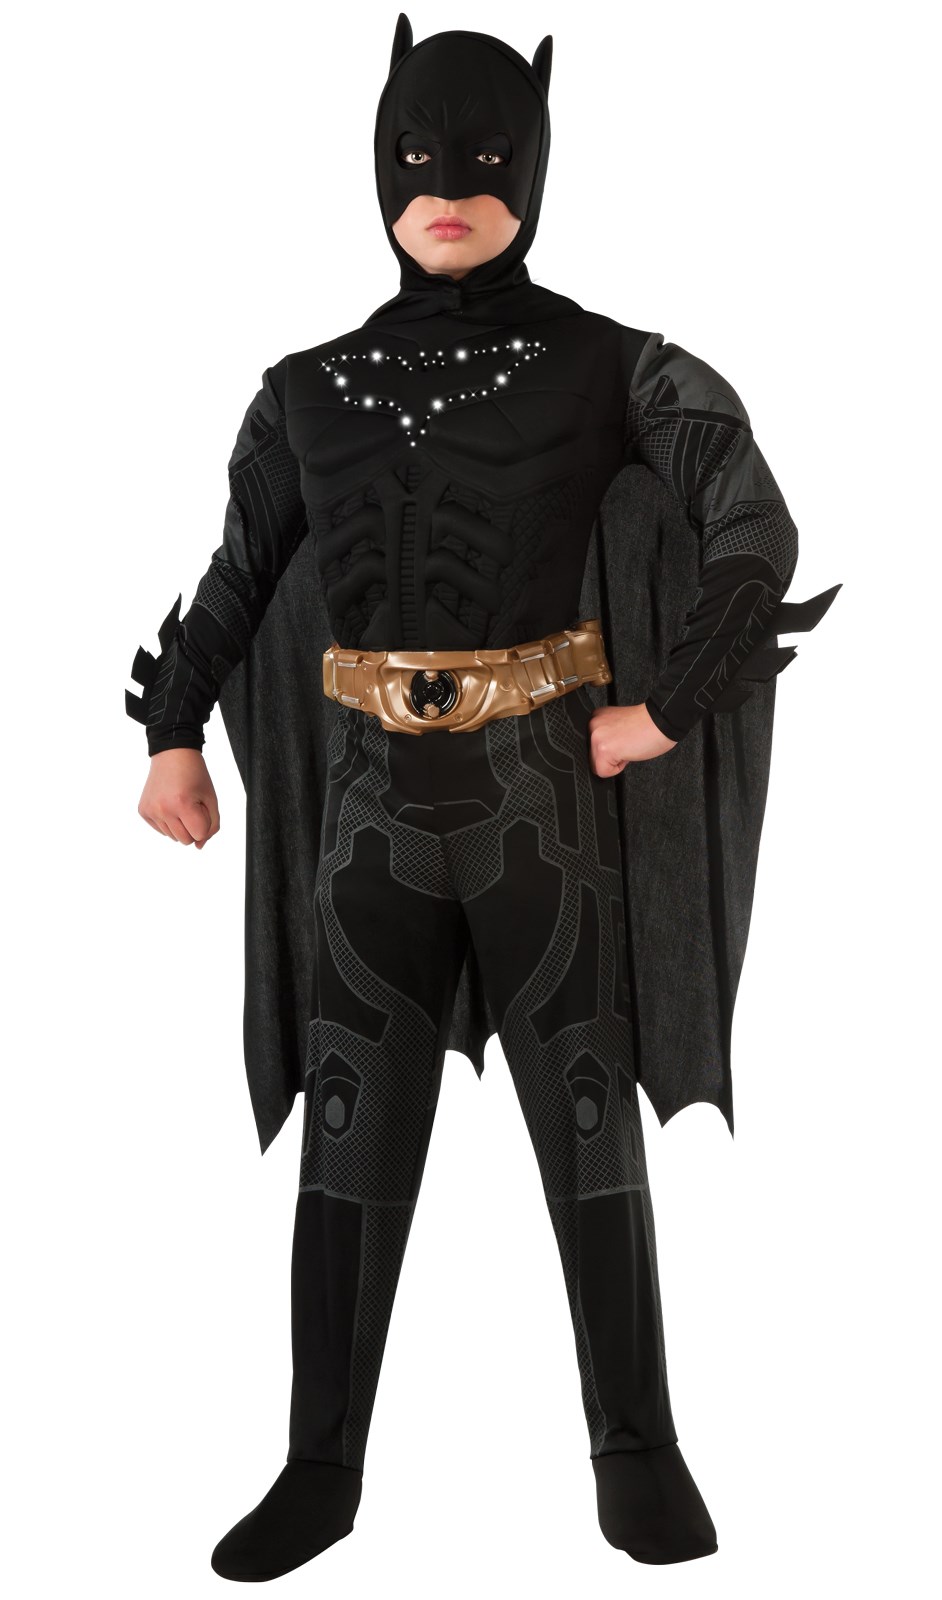 The Dark Knight Rises Batman Light-Up Child Costume